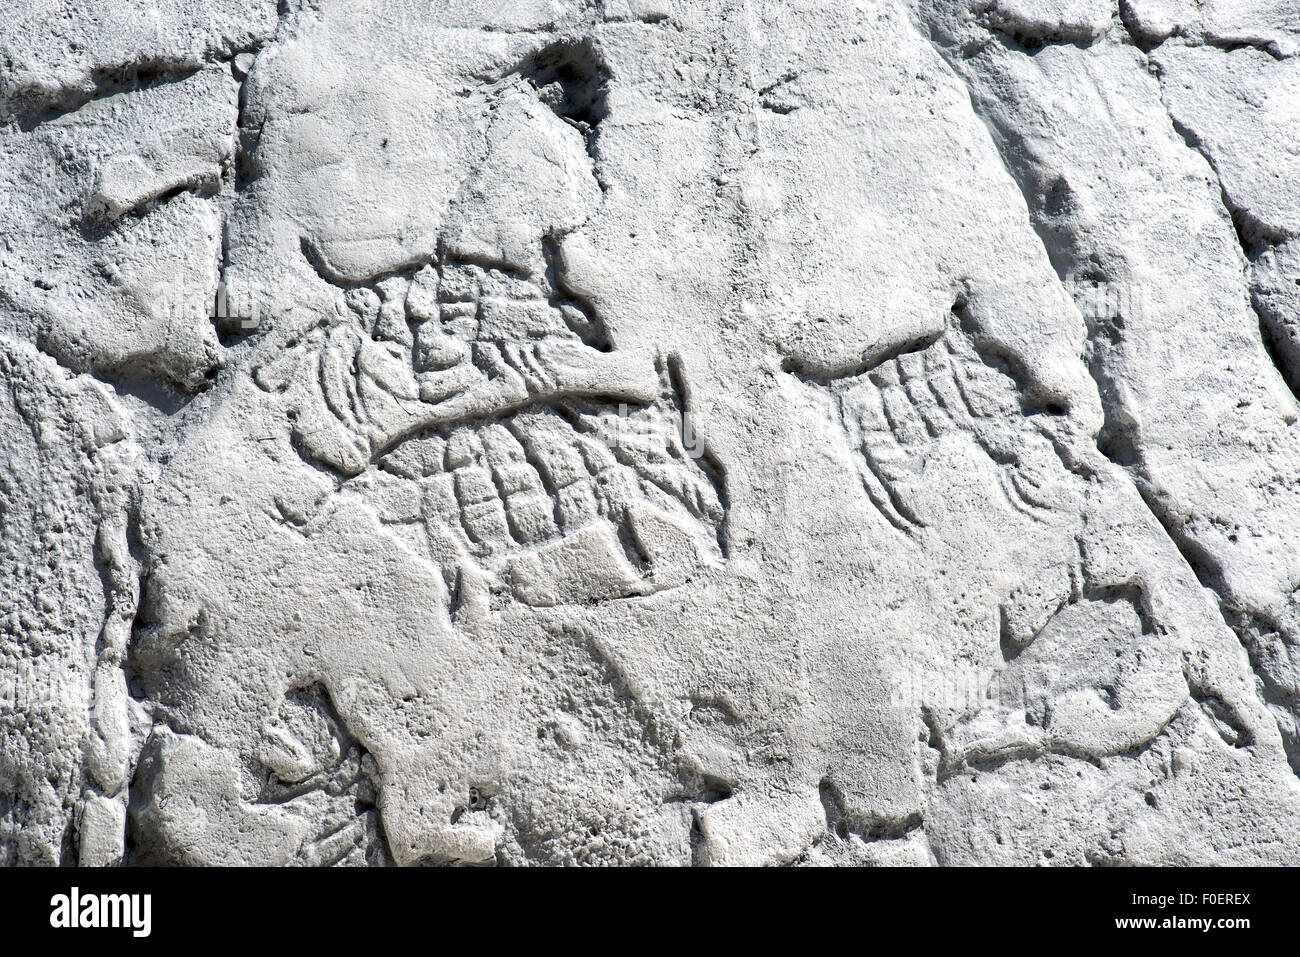 Primitive artwork on a rock, animals and symbols on white stone Stock Photo